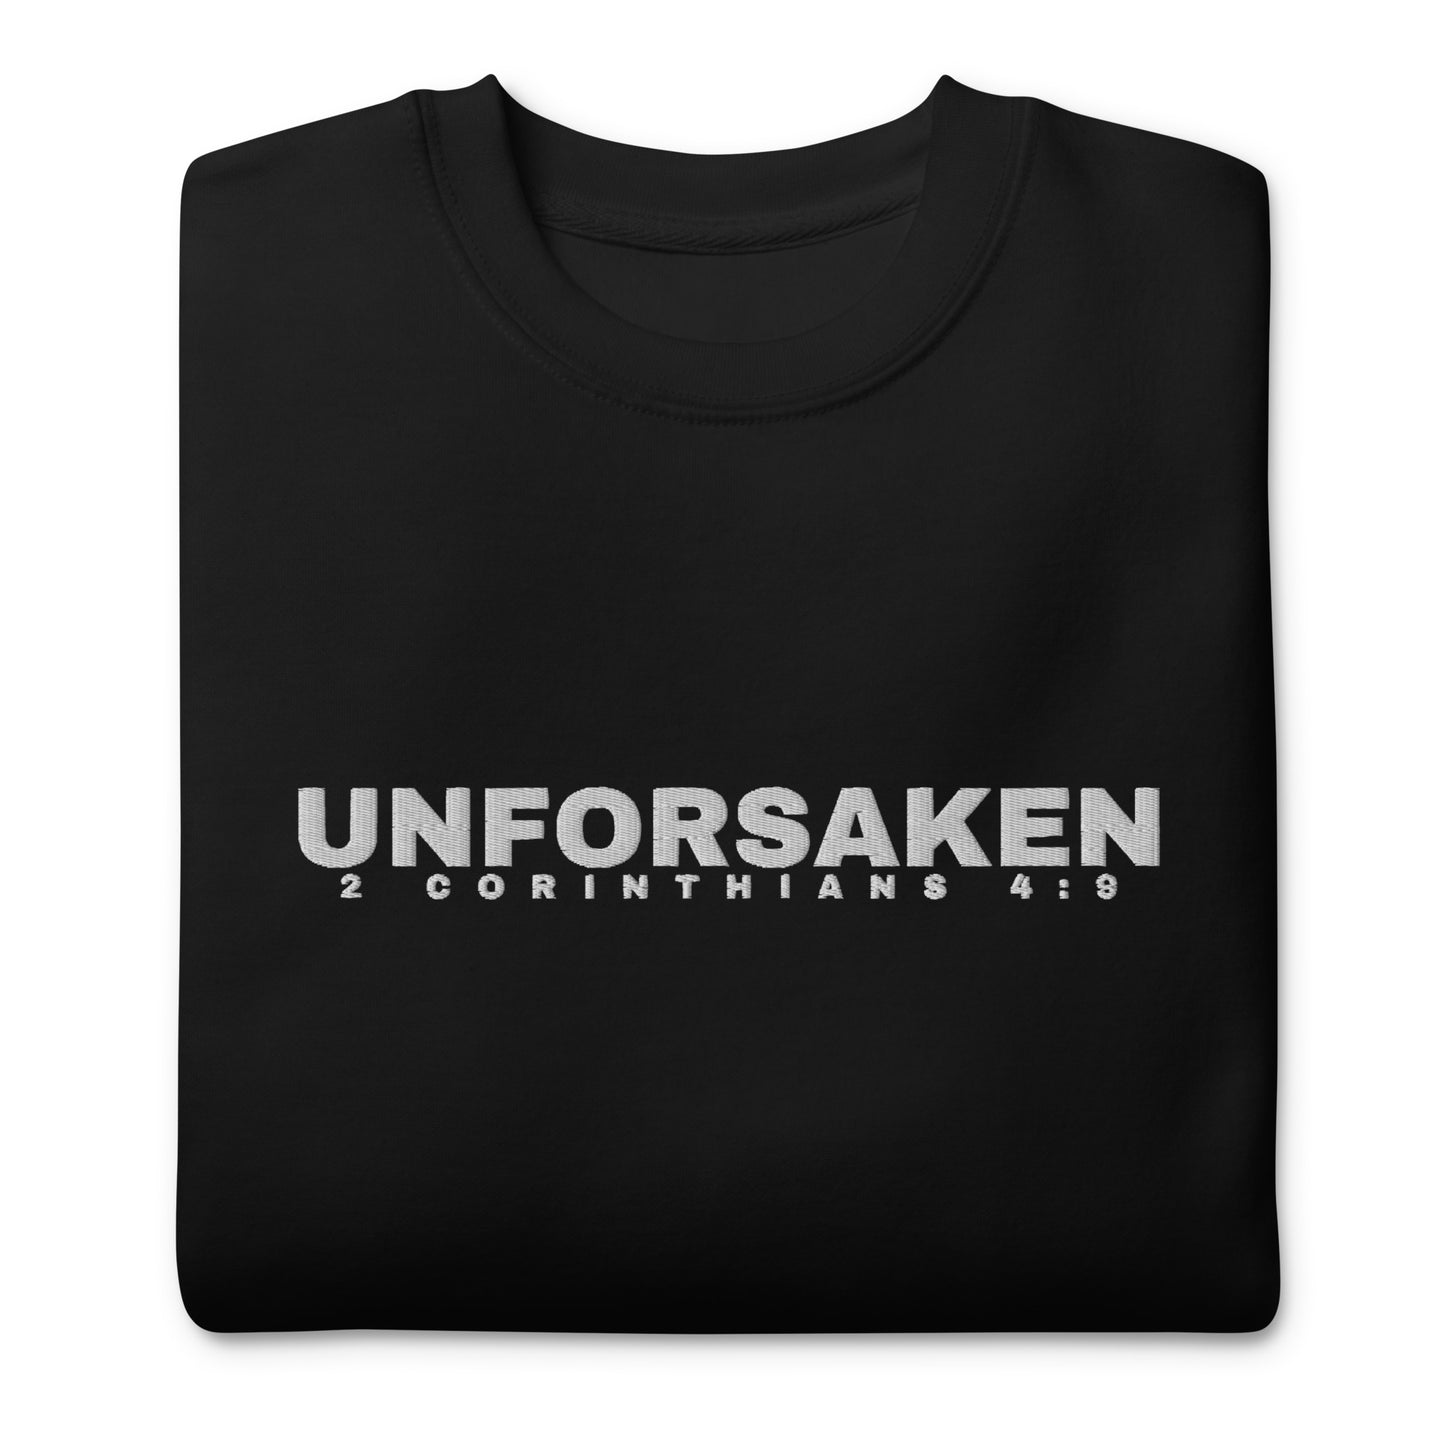 UNFORSAKEN 002 OG Embroidered Training Crewneck